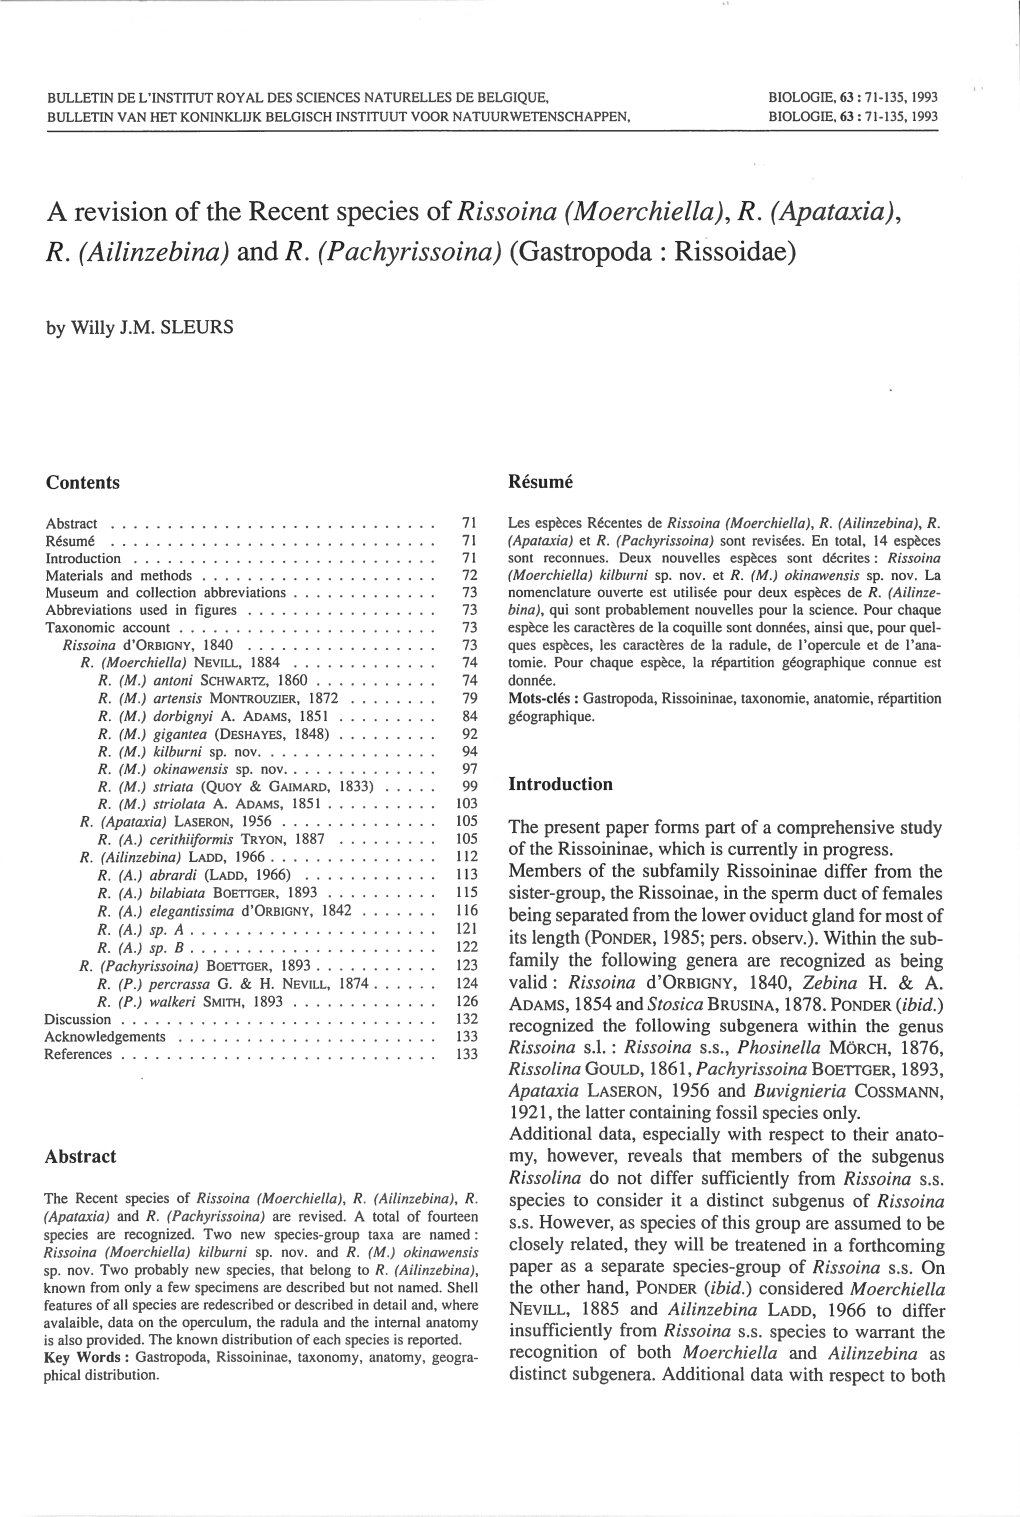 A Revision of the Recent Species of Rissoina (Moerchiella), R. (Apataxia), R. (Ailinzebina) and R . (Pachyrissoina) (Gastropoda: Rissoidae)